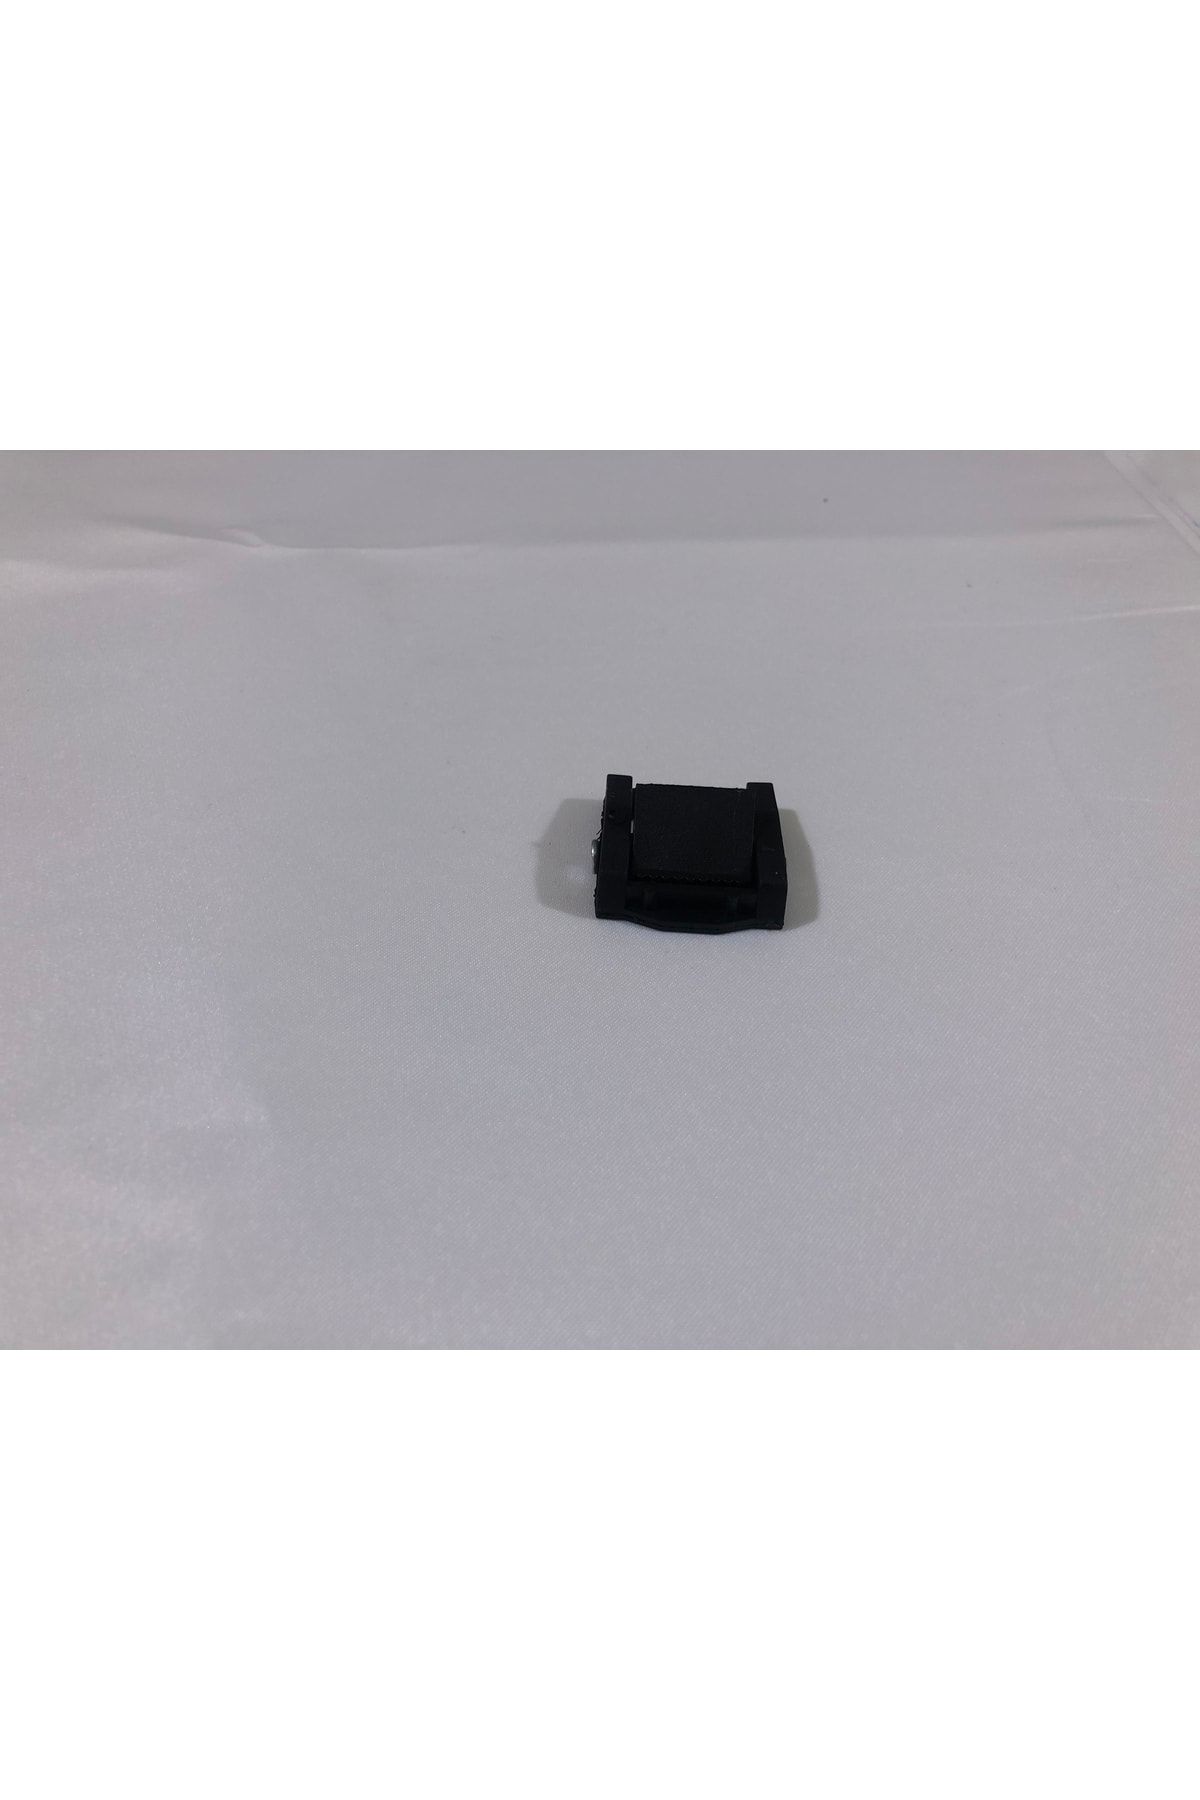 Üçyıldız Spanzet Polyemit 25mm Mini Mandal Gerdirme Tokası 2'li Paket